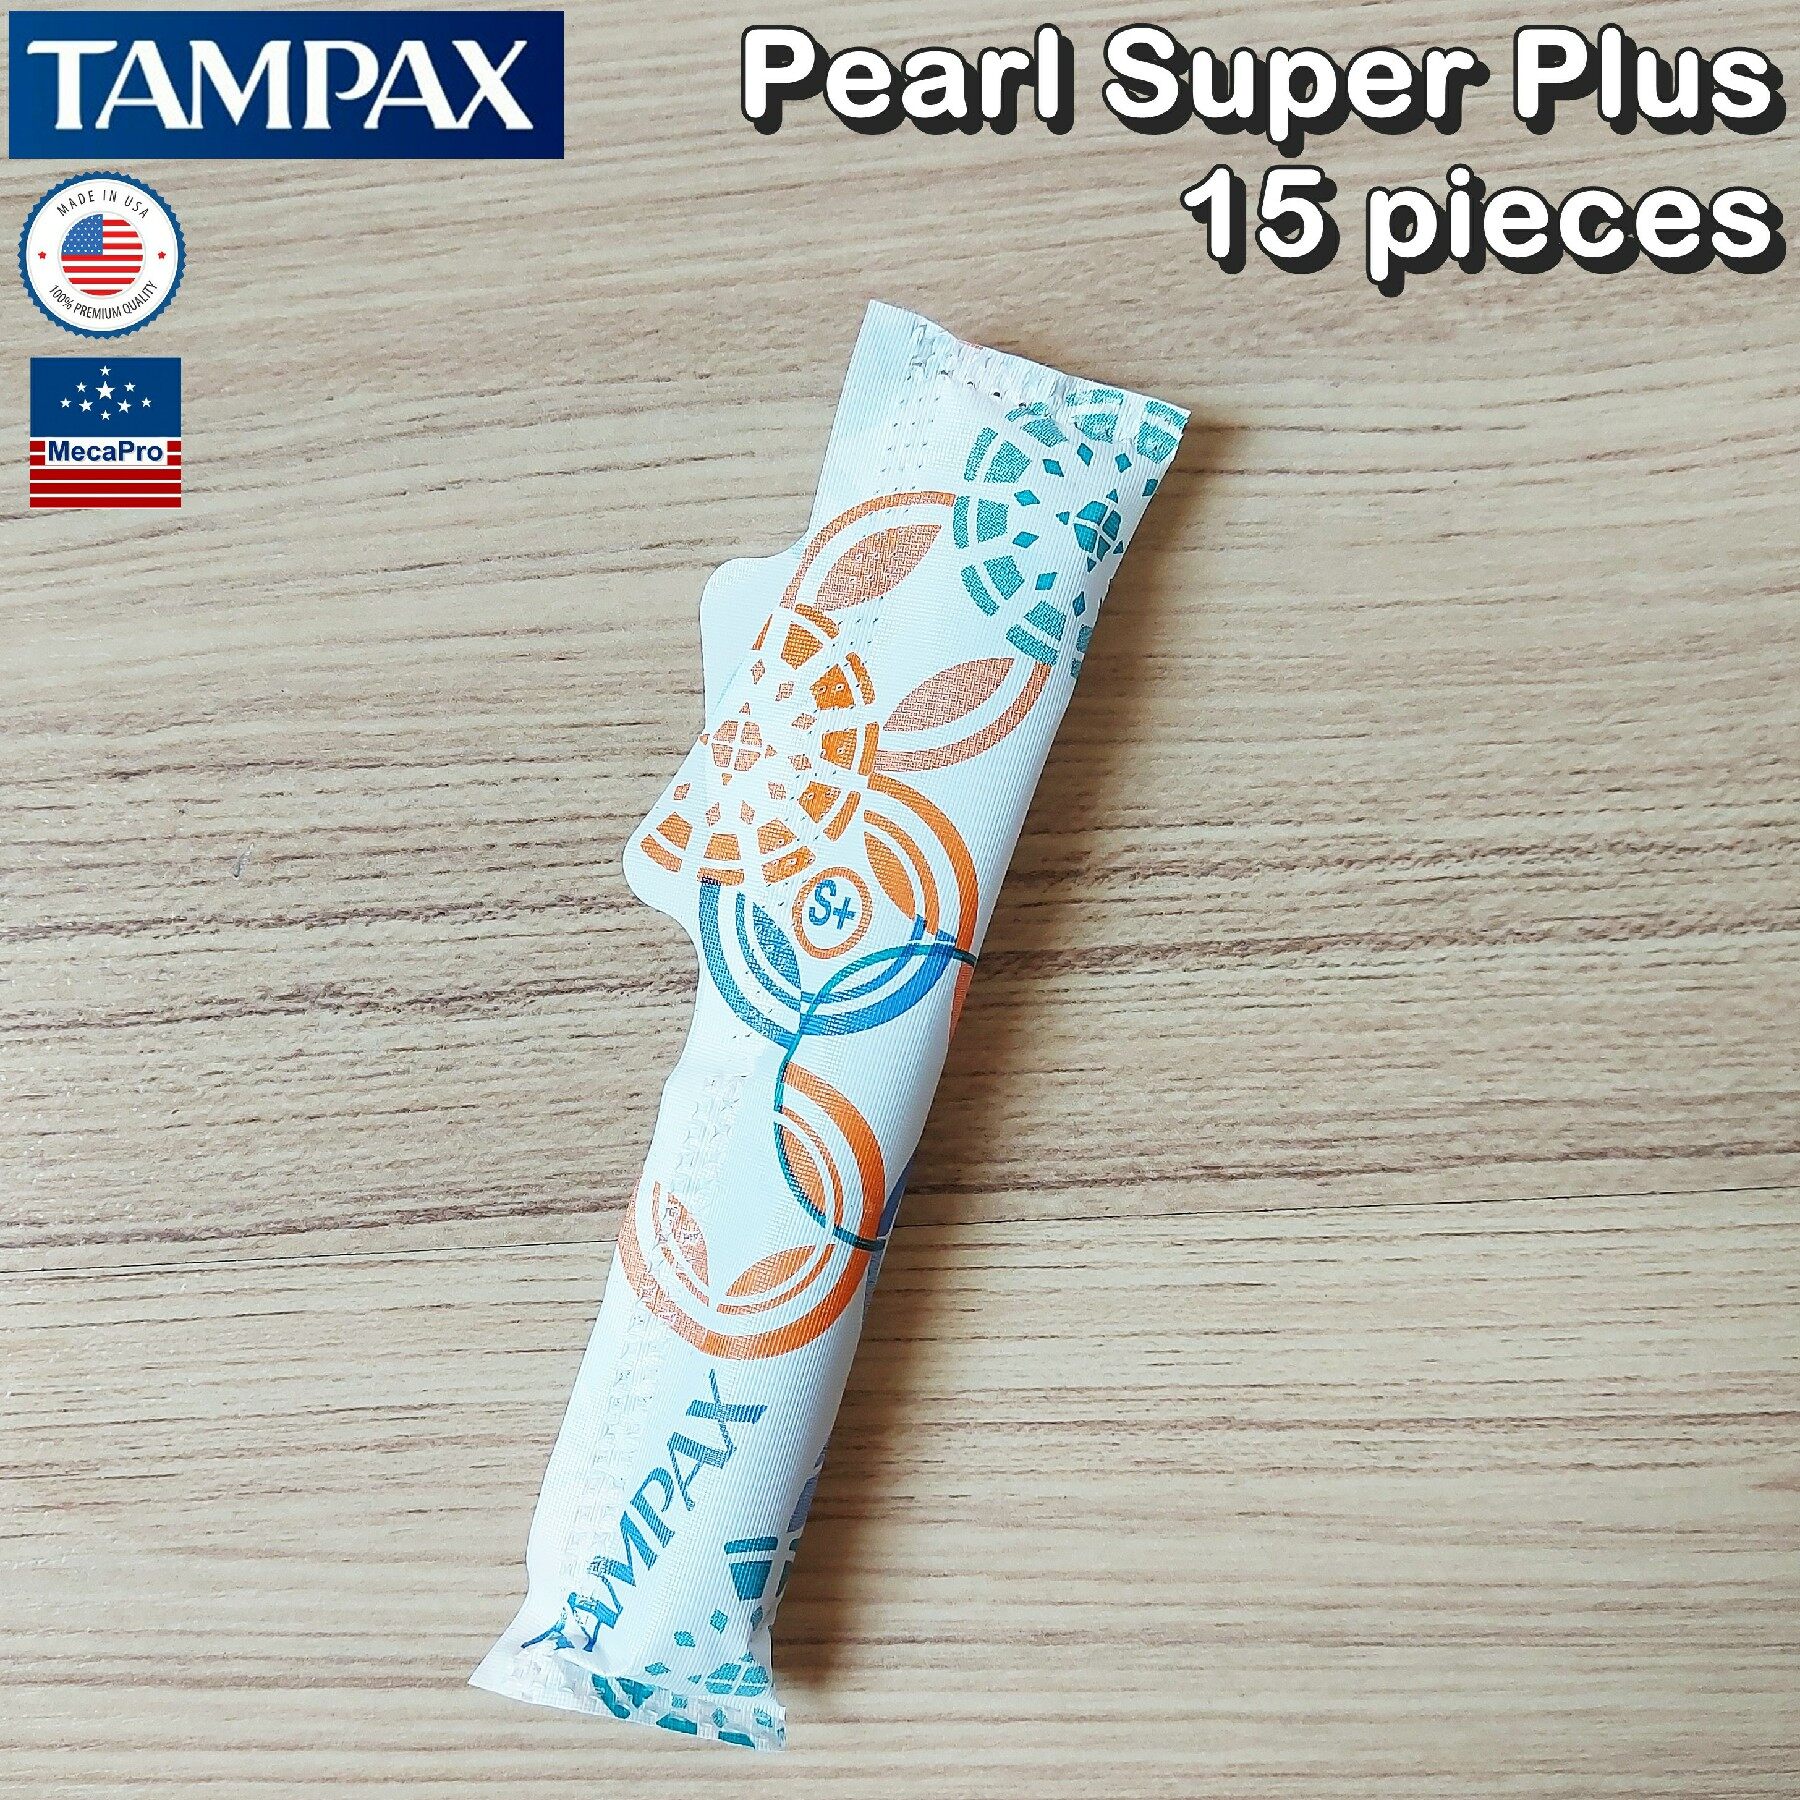 Tampax® Pearl Super Plus Plastic Tampons 15 Pieces ผ้าอนามัยแบบสอด 15 ชิ้น เหมาะกับวันมามาก